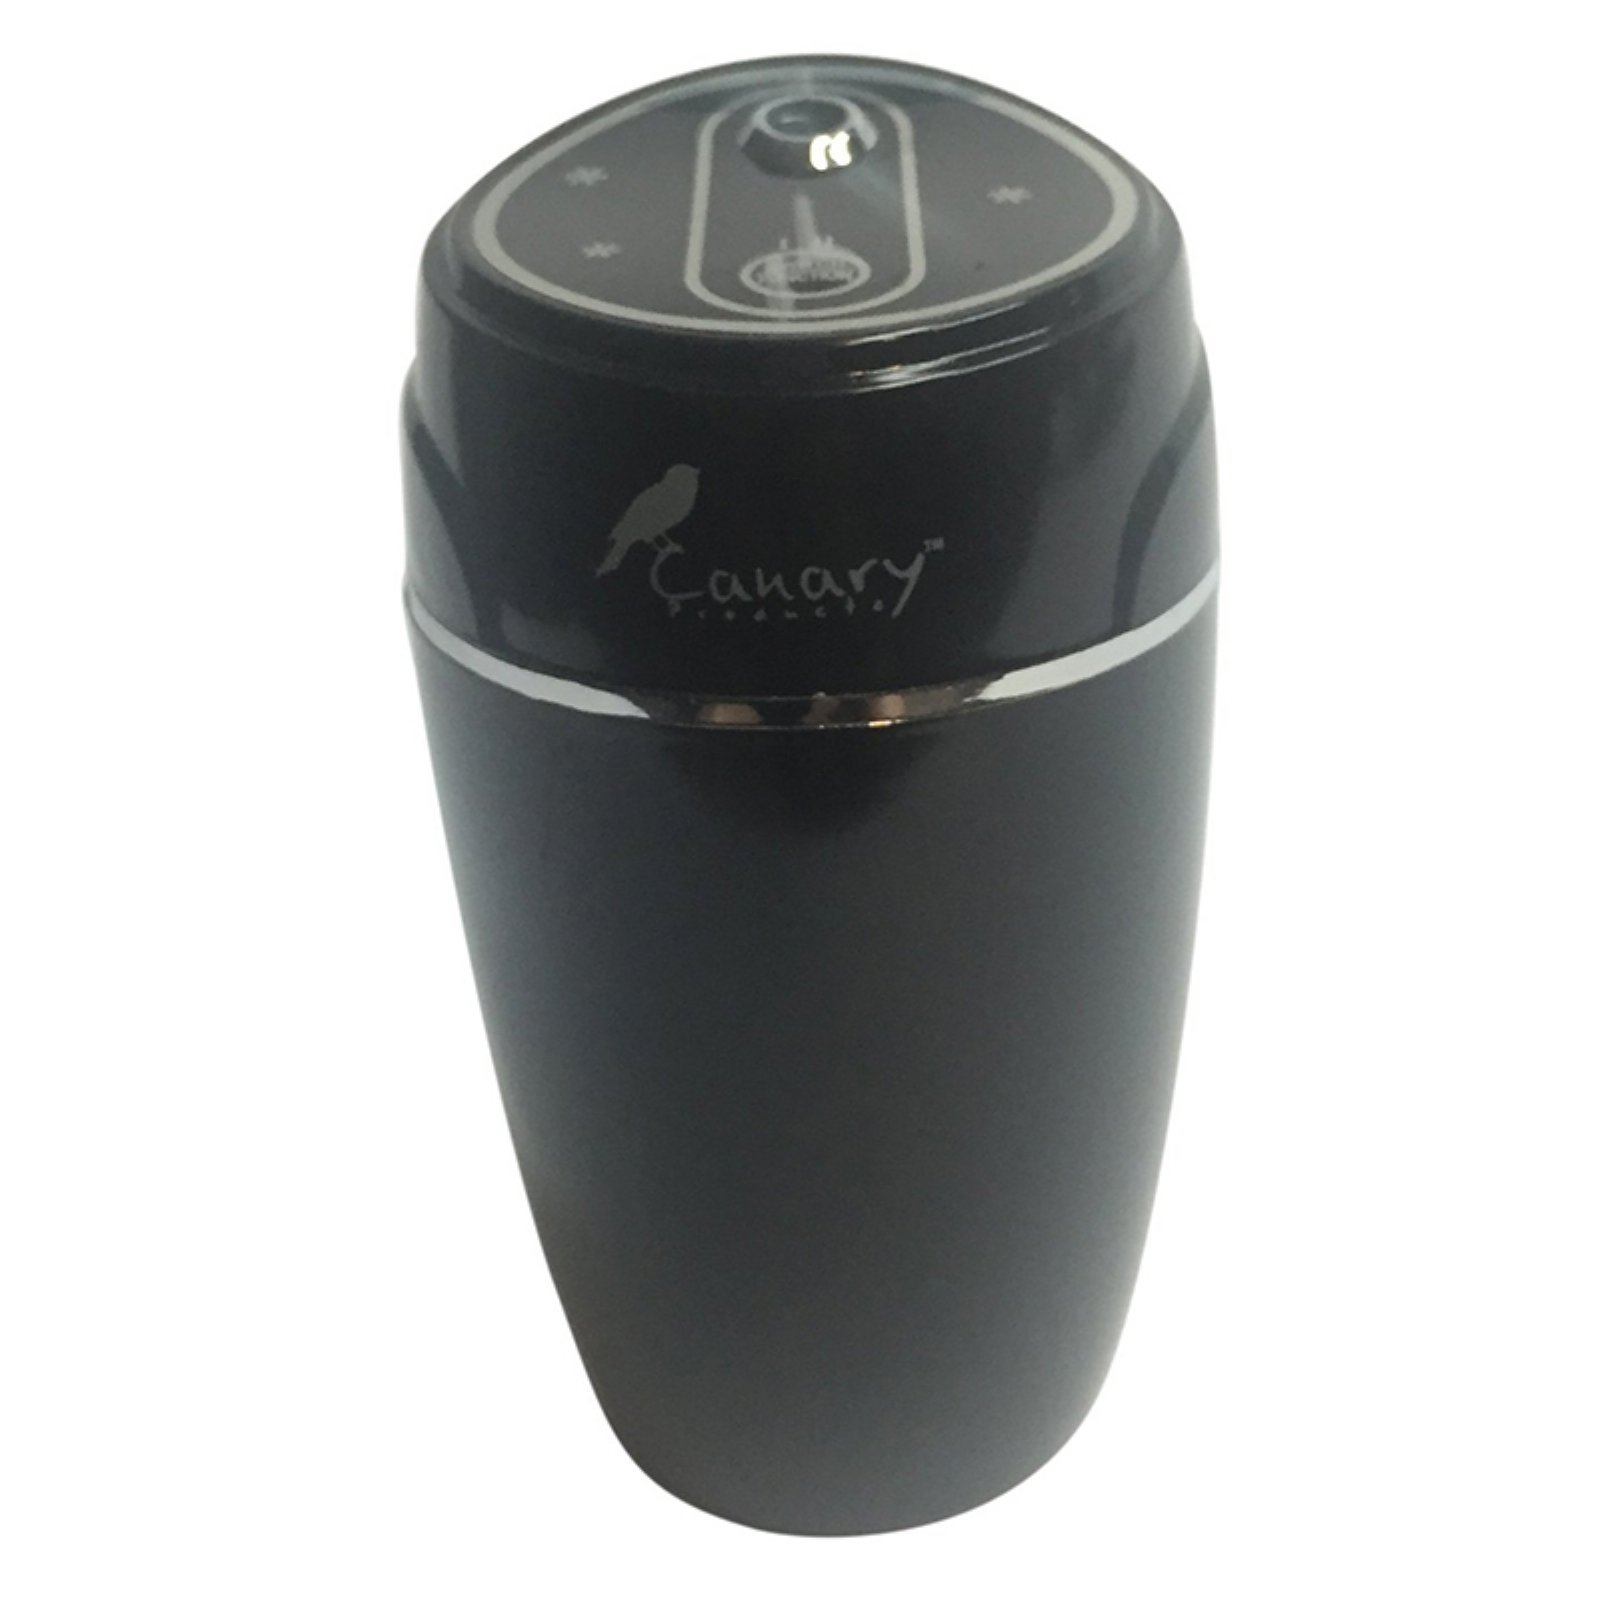 Xbrand Mini Car & Travel Cool Mist Humidifier w/ Plug-In Adapter, 5.7 Inch Tall